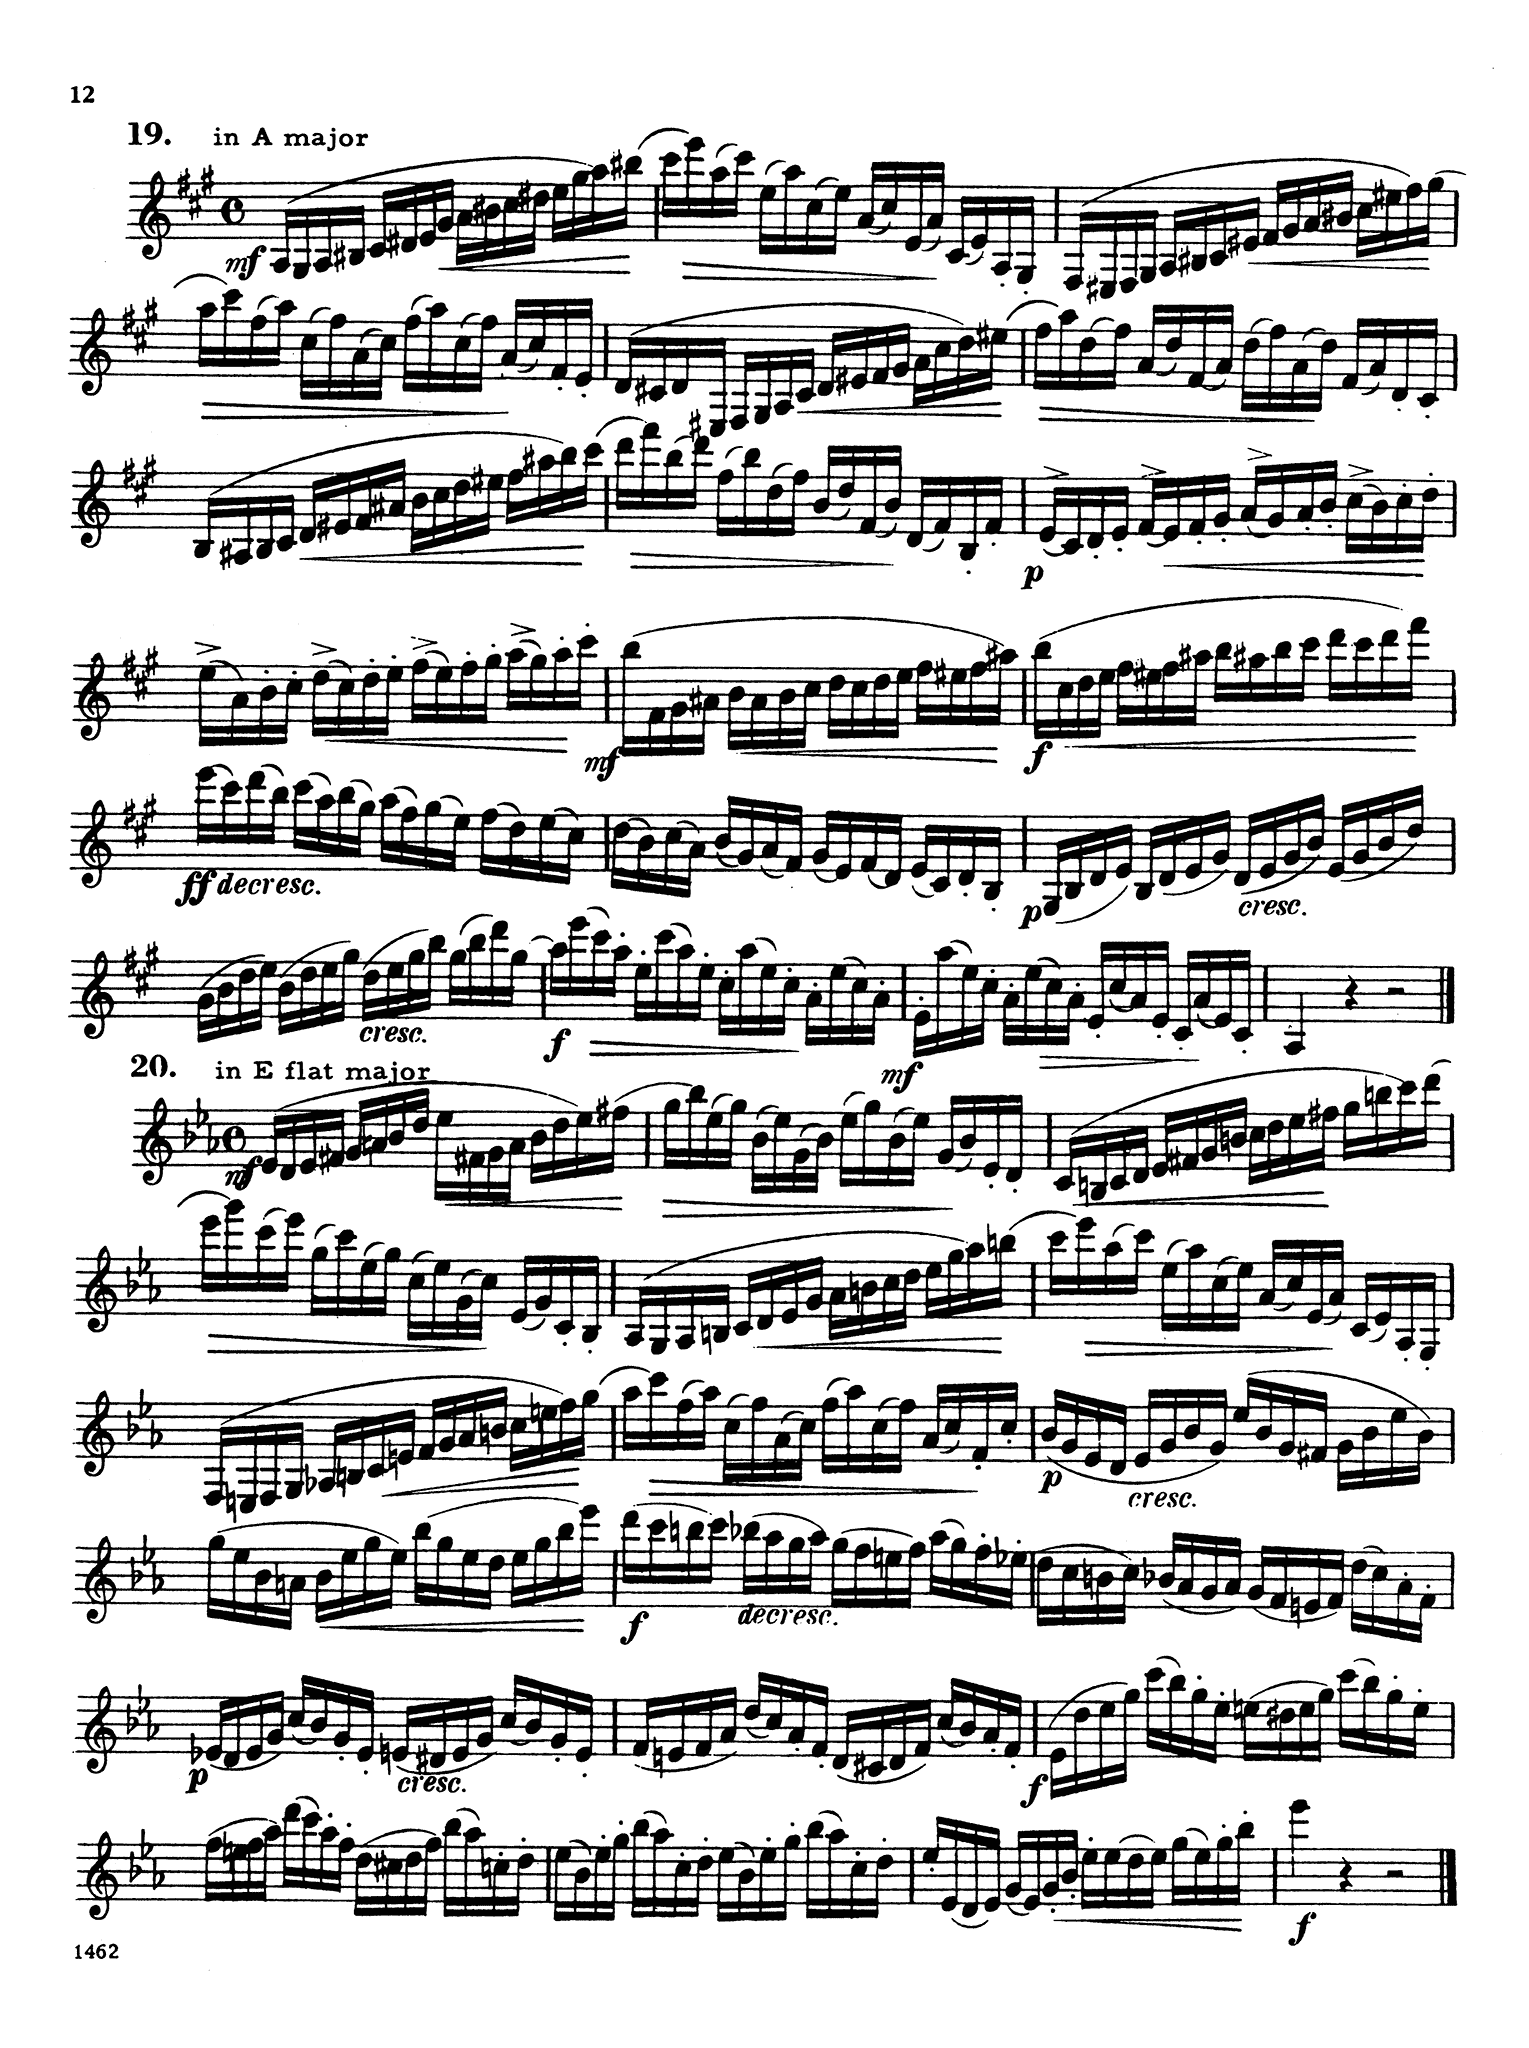 416 Progressive Studies for Clarinet, Book 3 Page 12